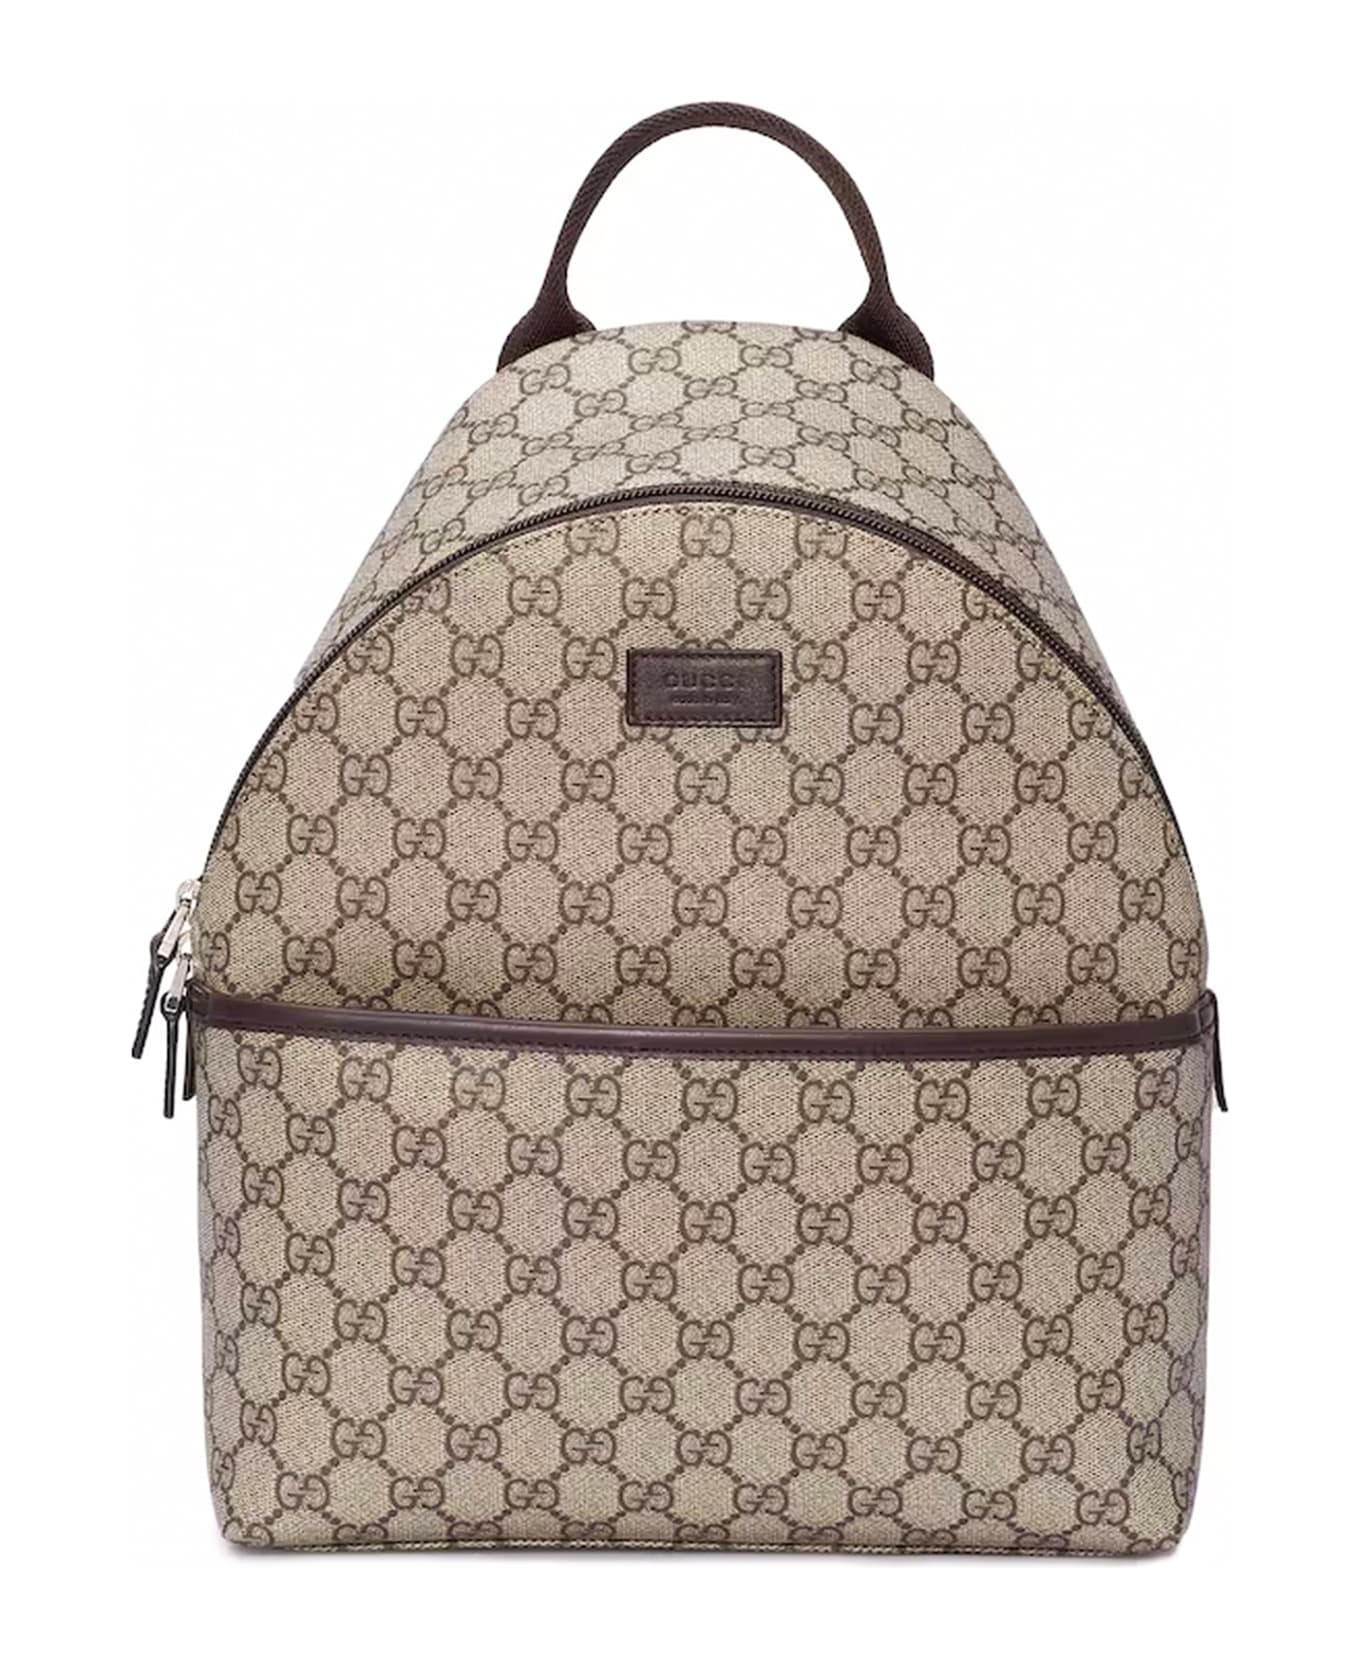 Gucci Supreme Canvas Backpack - BEIGE